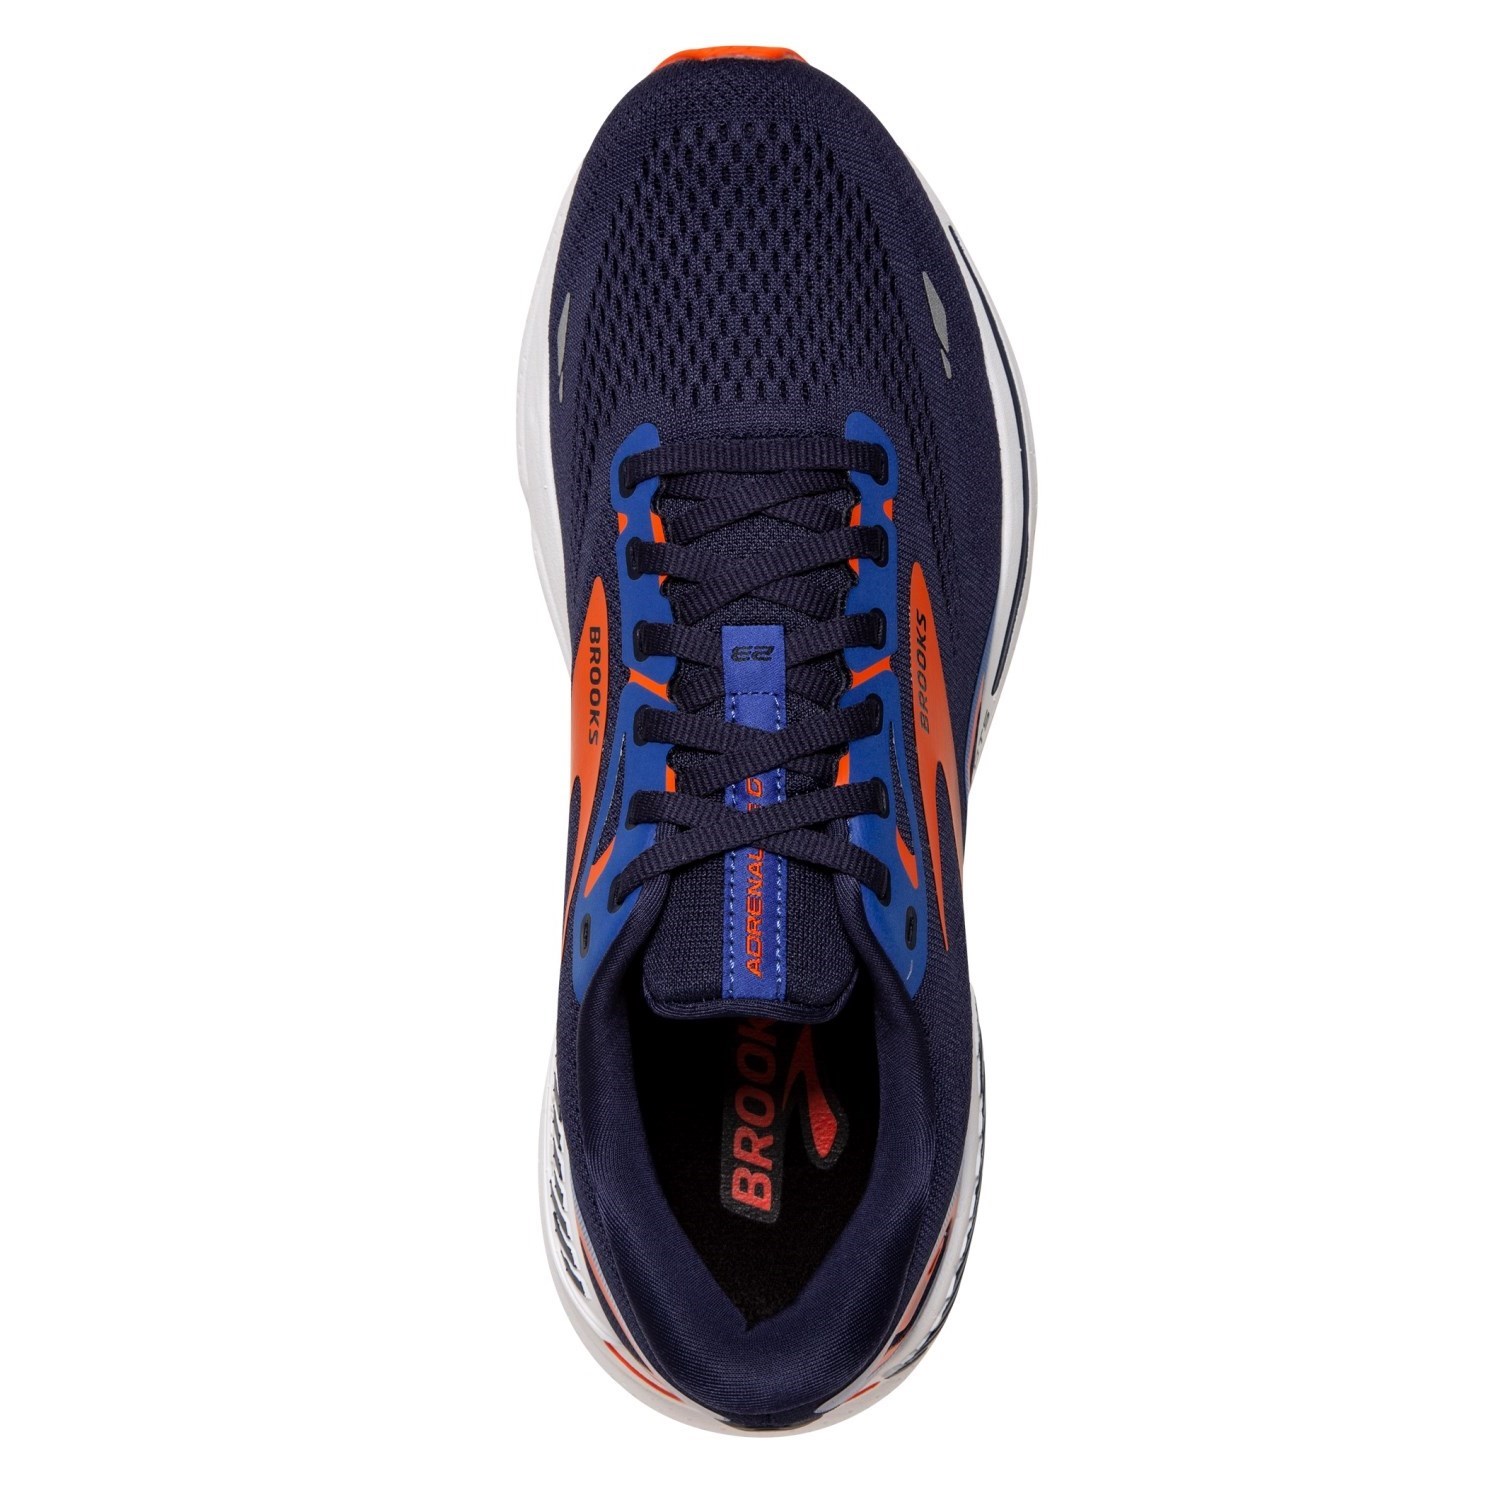 Brooks Adrenaline GTS 23 - Mens Running Shoes - Peacoat/Orange/Surf The ...